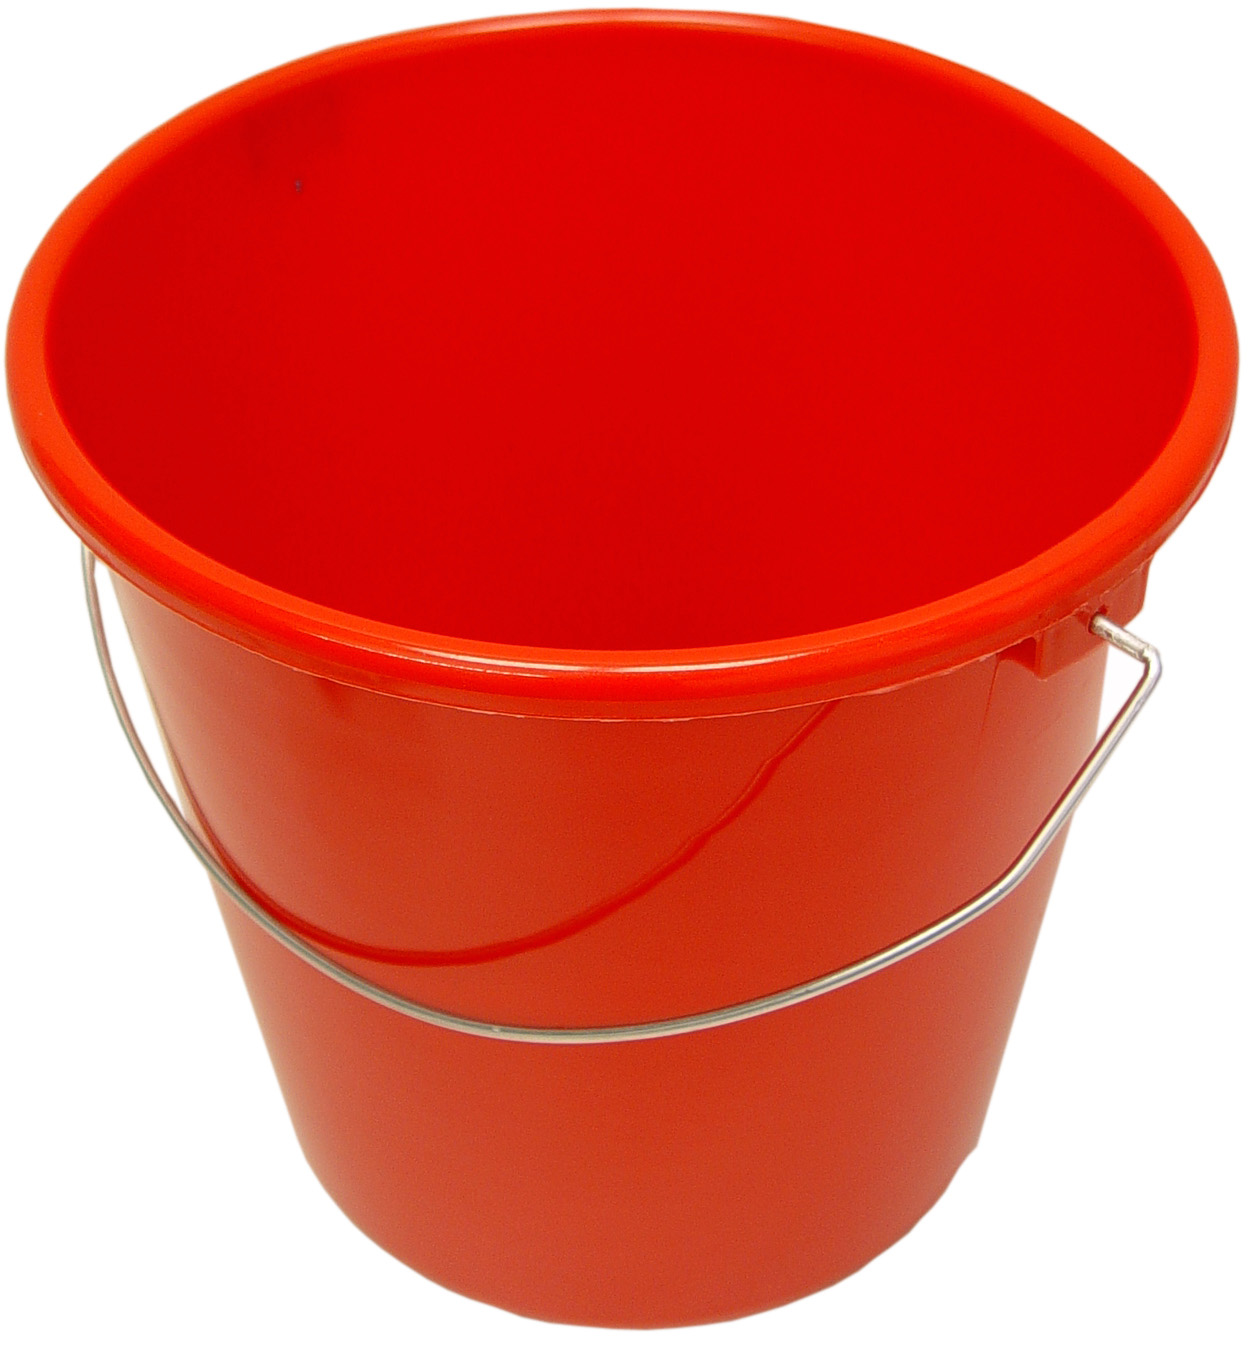 02349 - house hold bucket, 10 liter